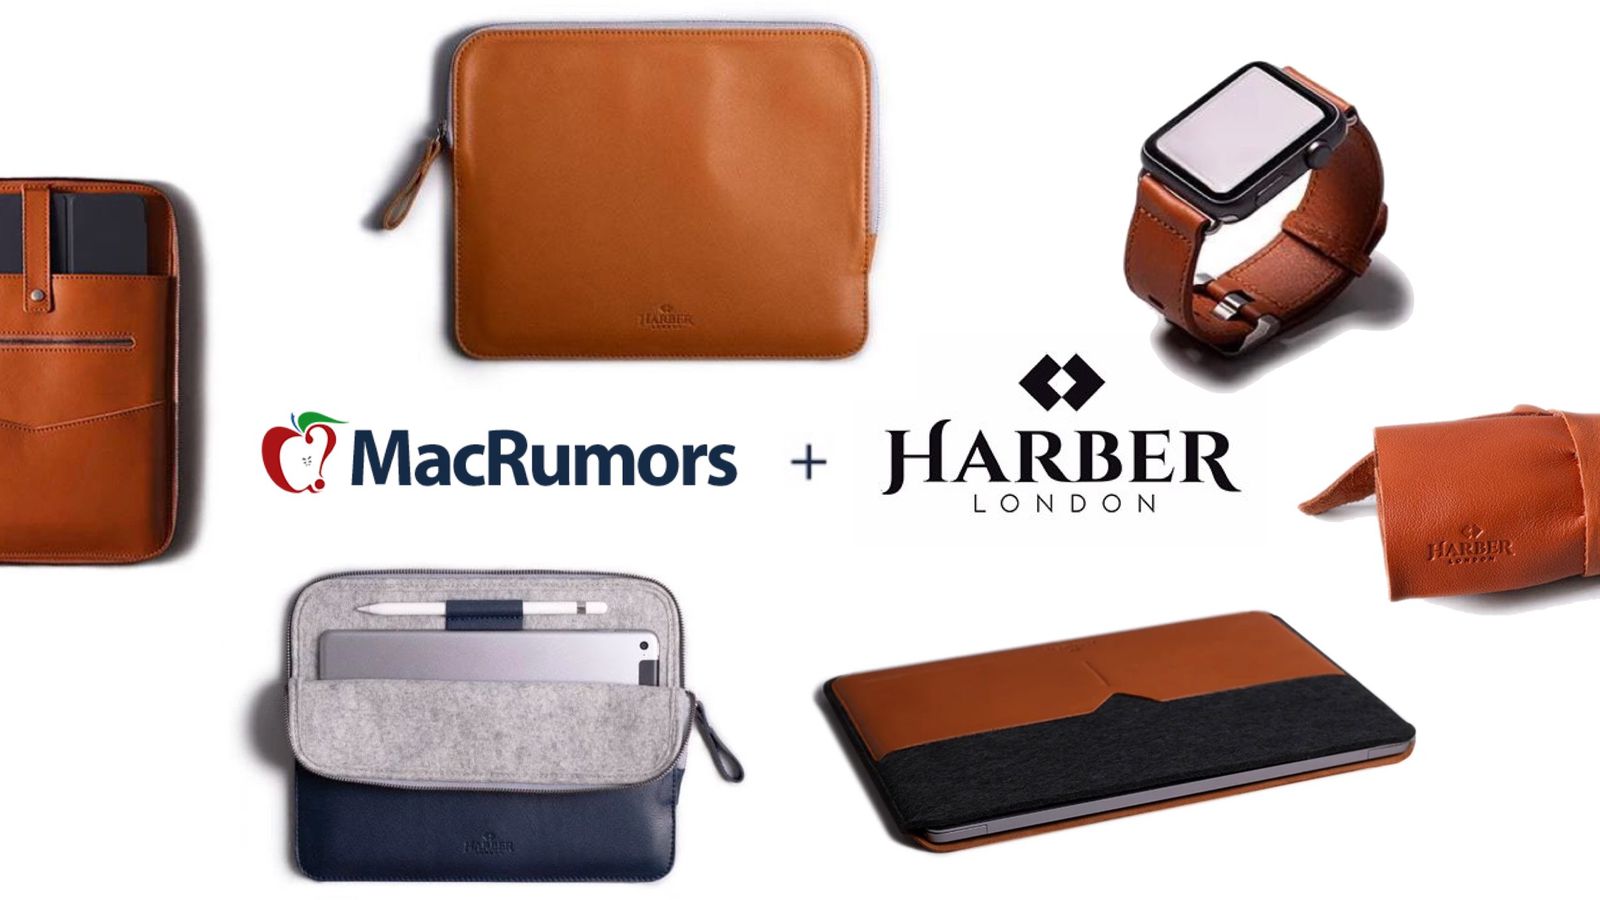 MacRumors Exclusive: Save 15% on Harber London's Leather Apple